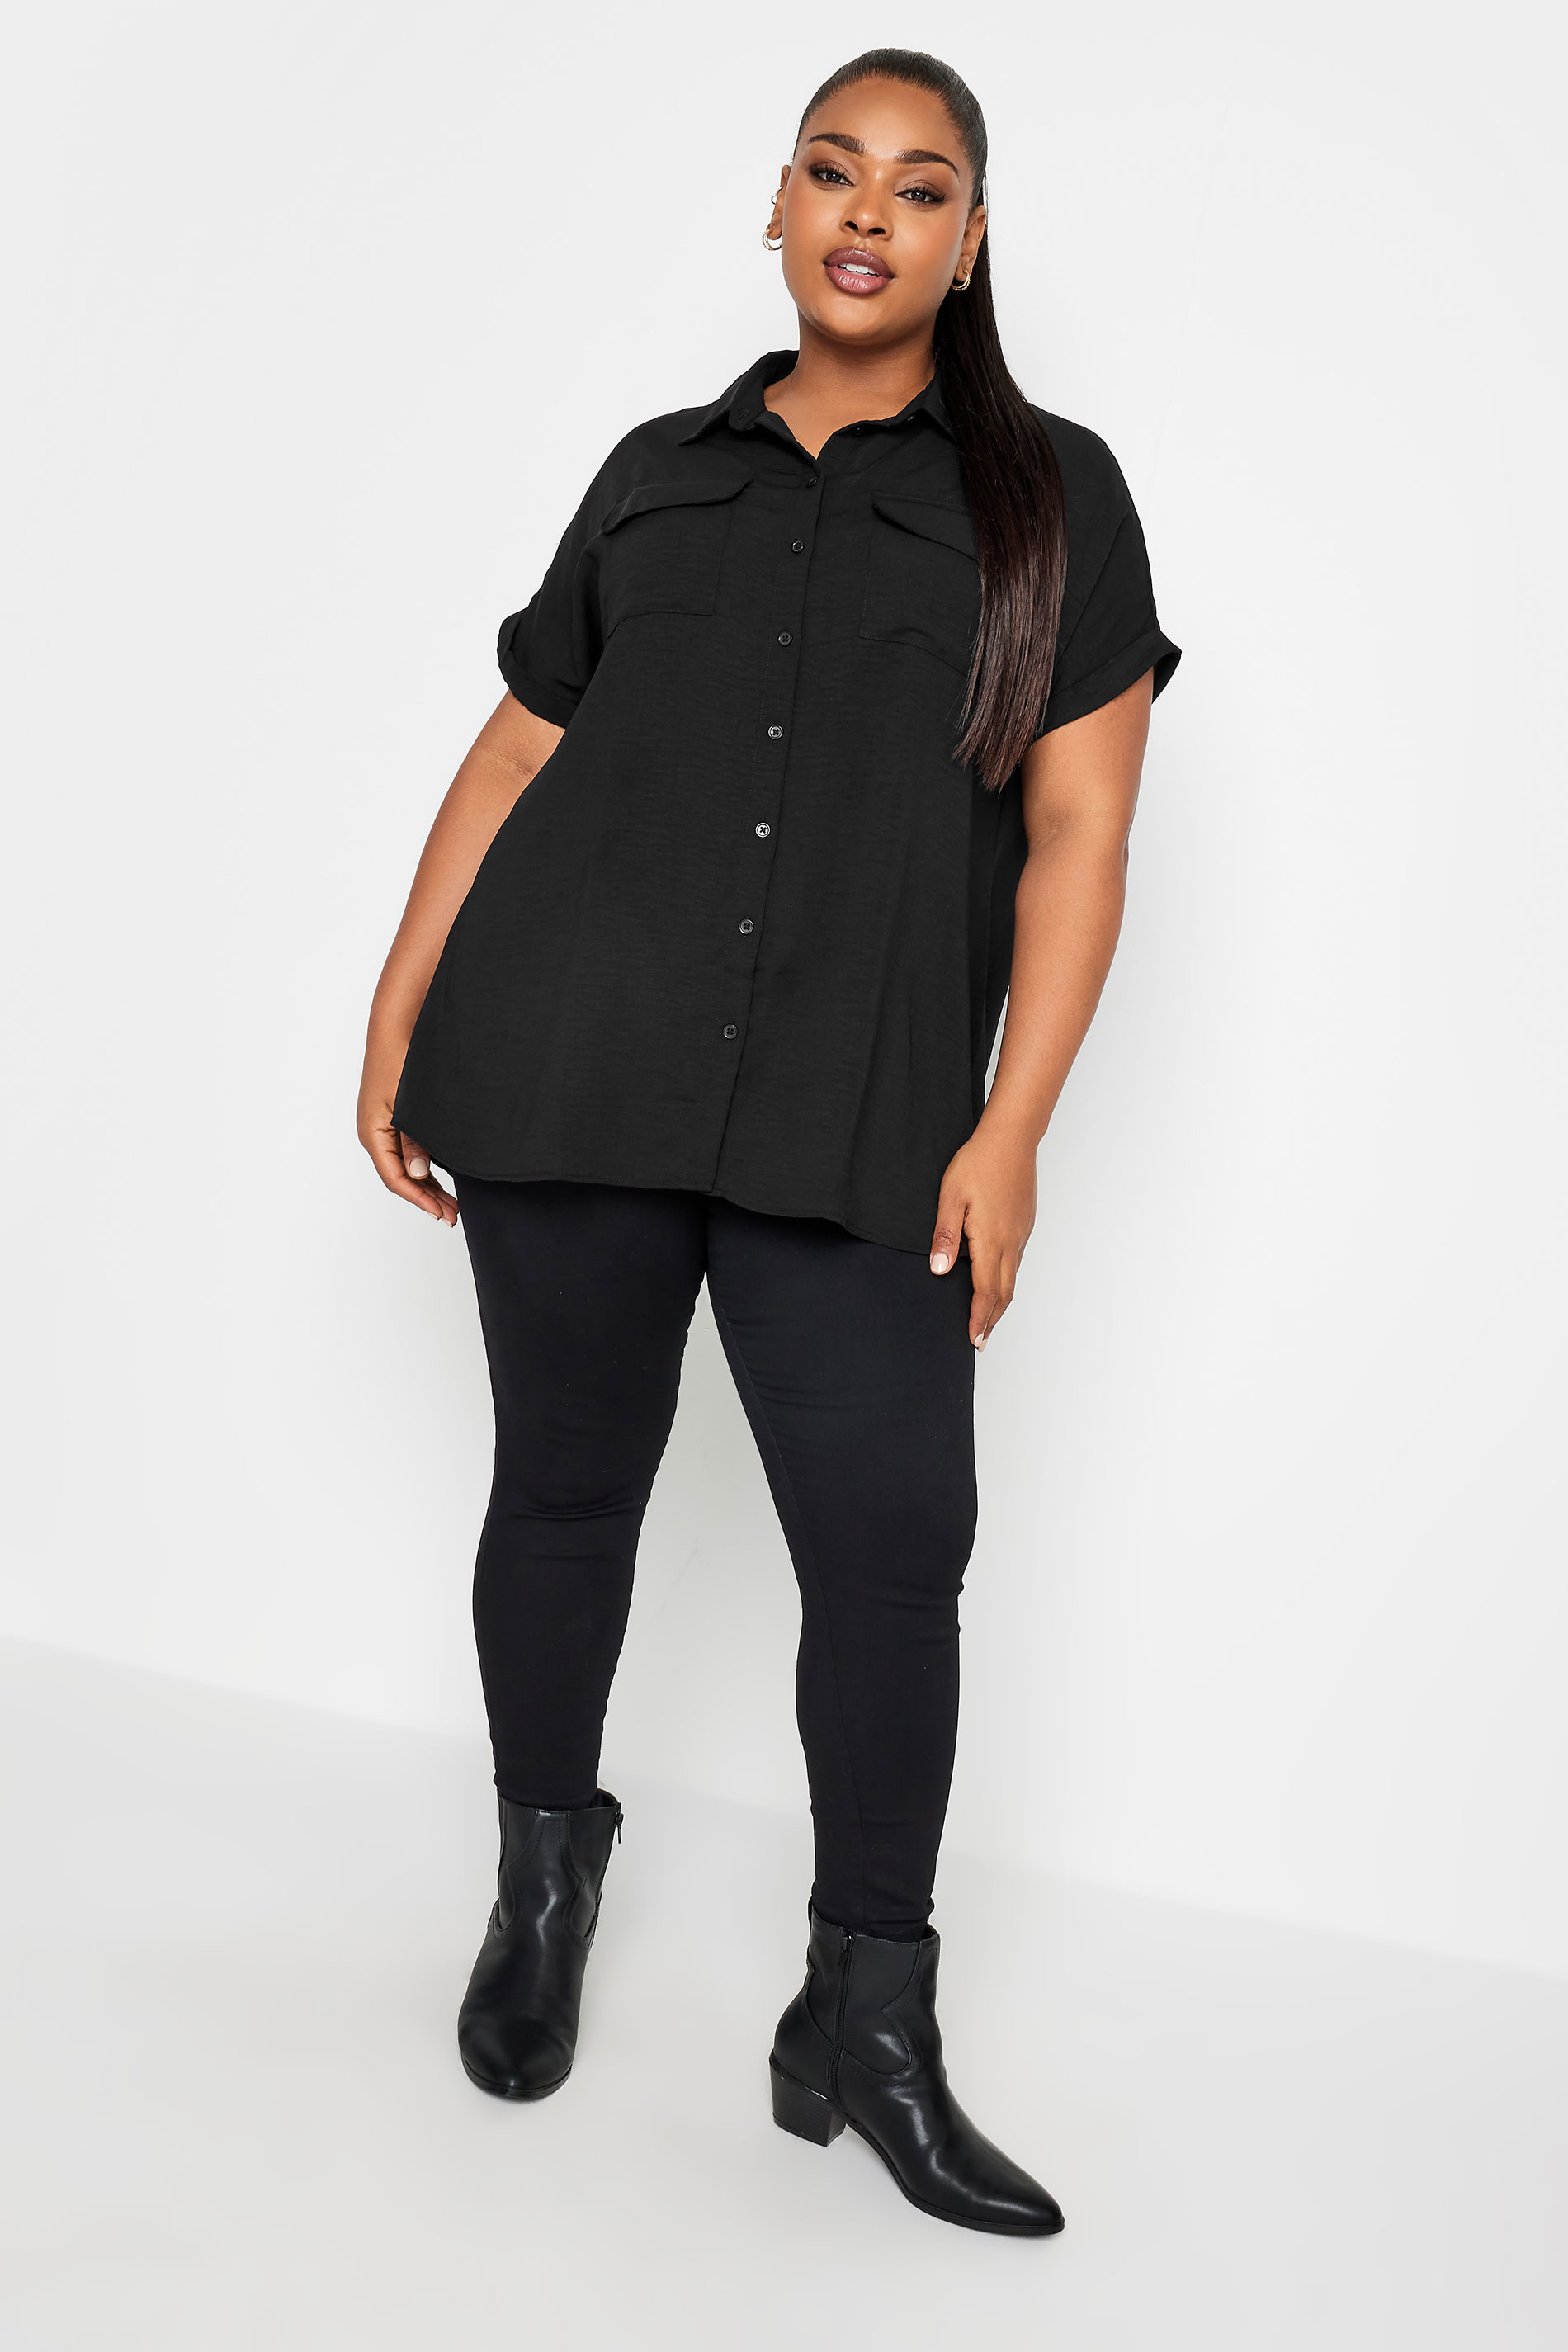 YOURS Curve Plus Size Black Utility Short Sleeve Shirt | Yours Clothing  2